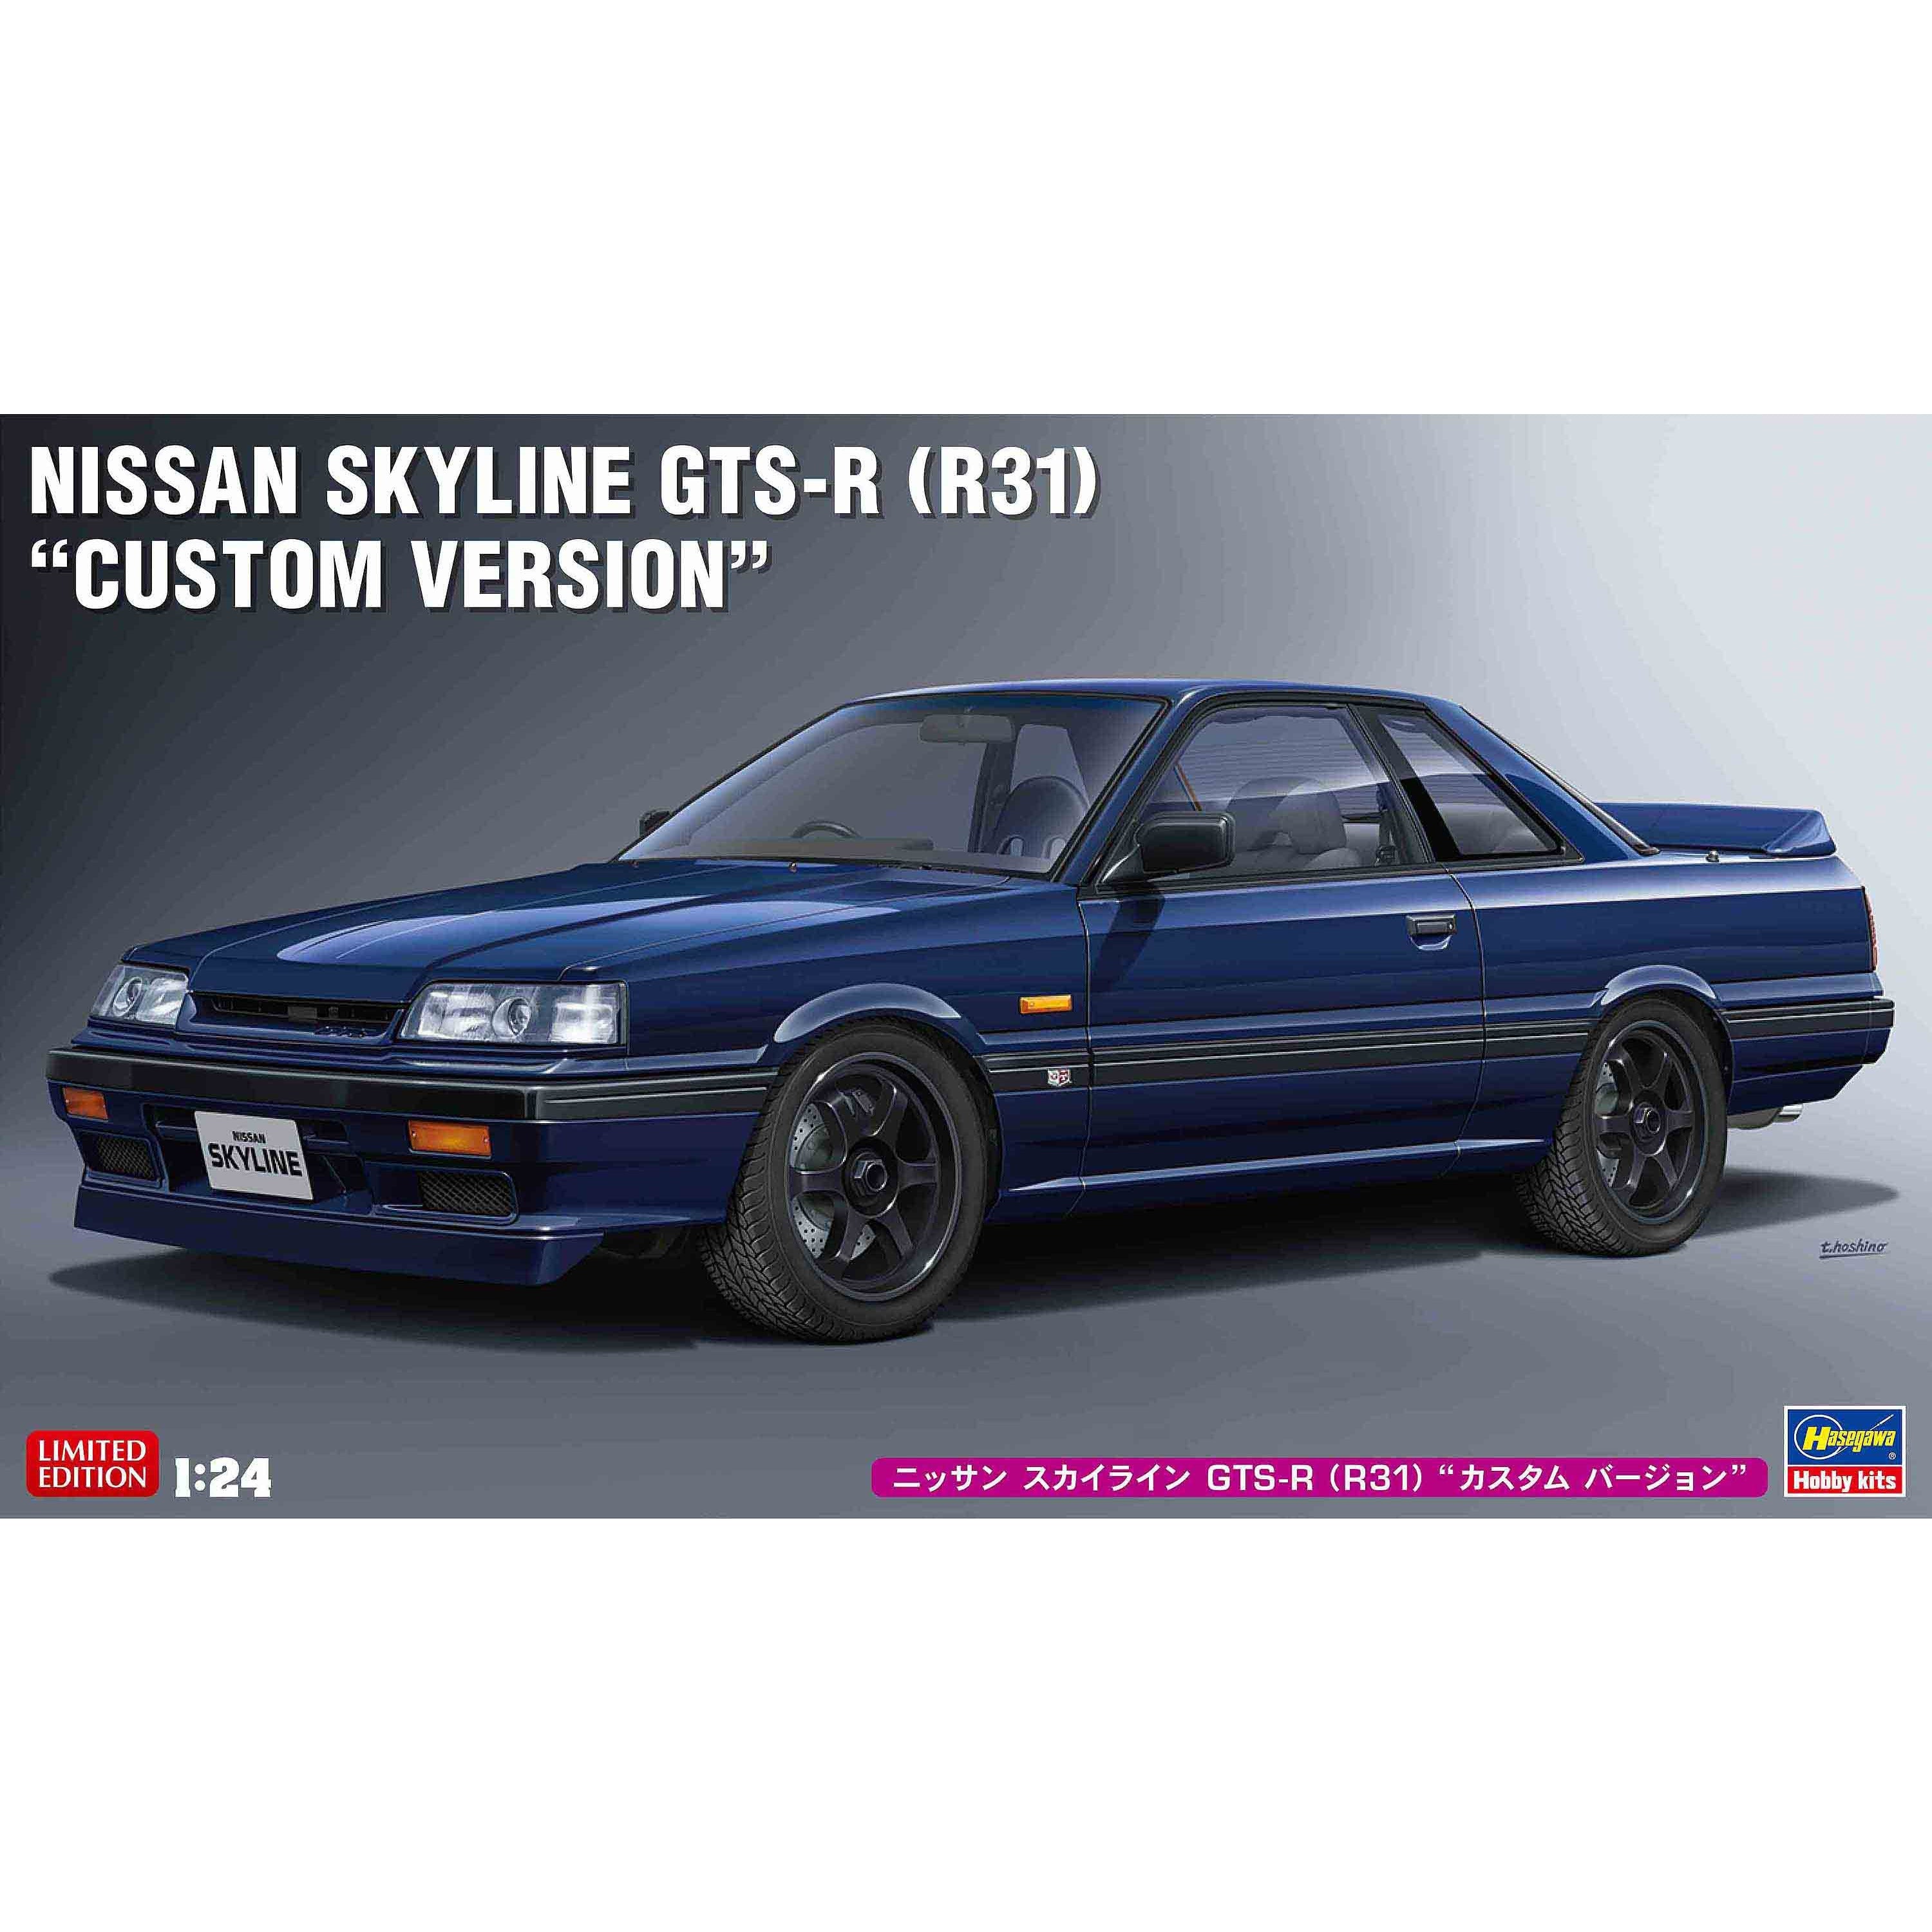 Nissan Skyline GTS-R (R31) "Custom Version" 1/24 #20575 by Hasegawa